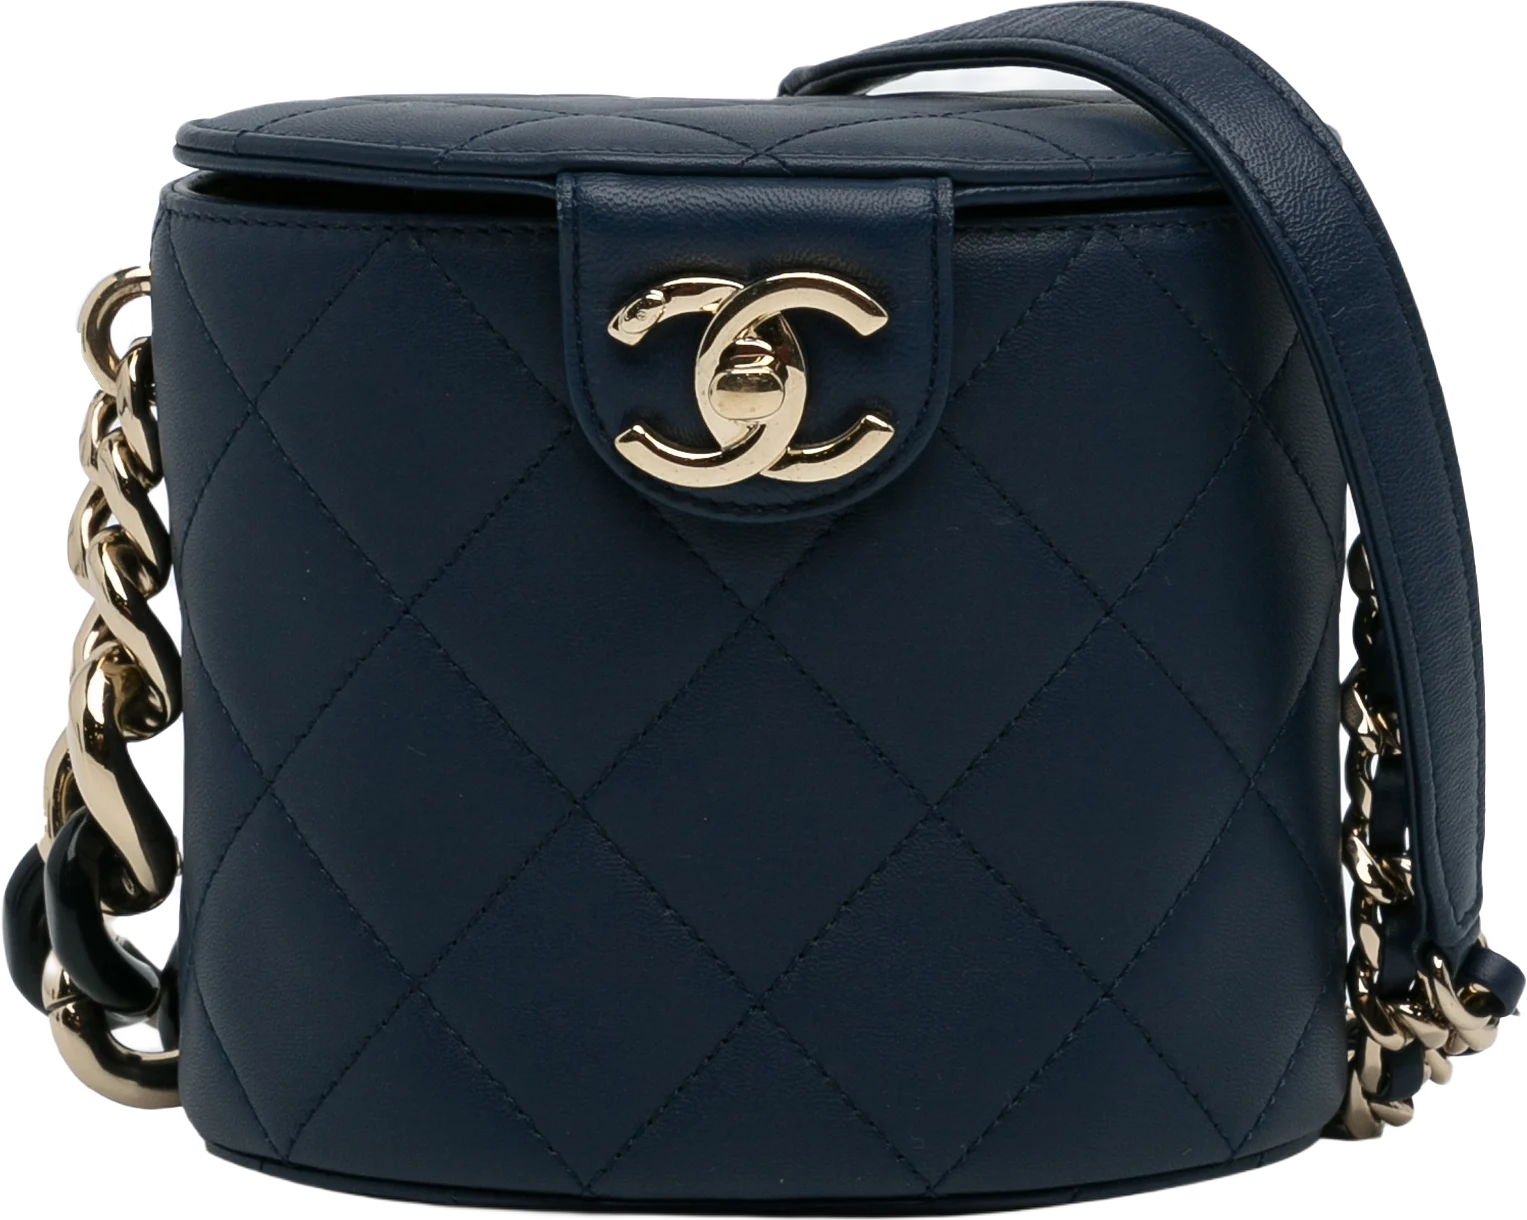 Chanel Cc Round Vanity Bag